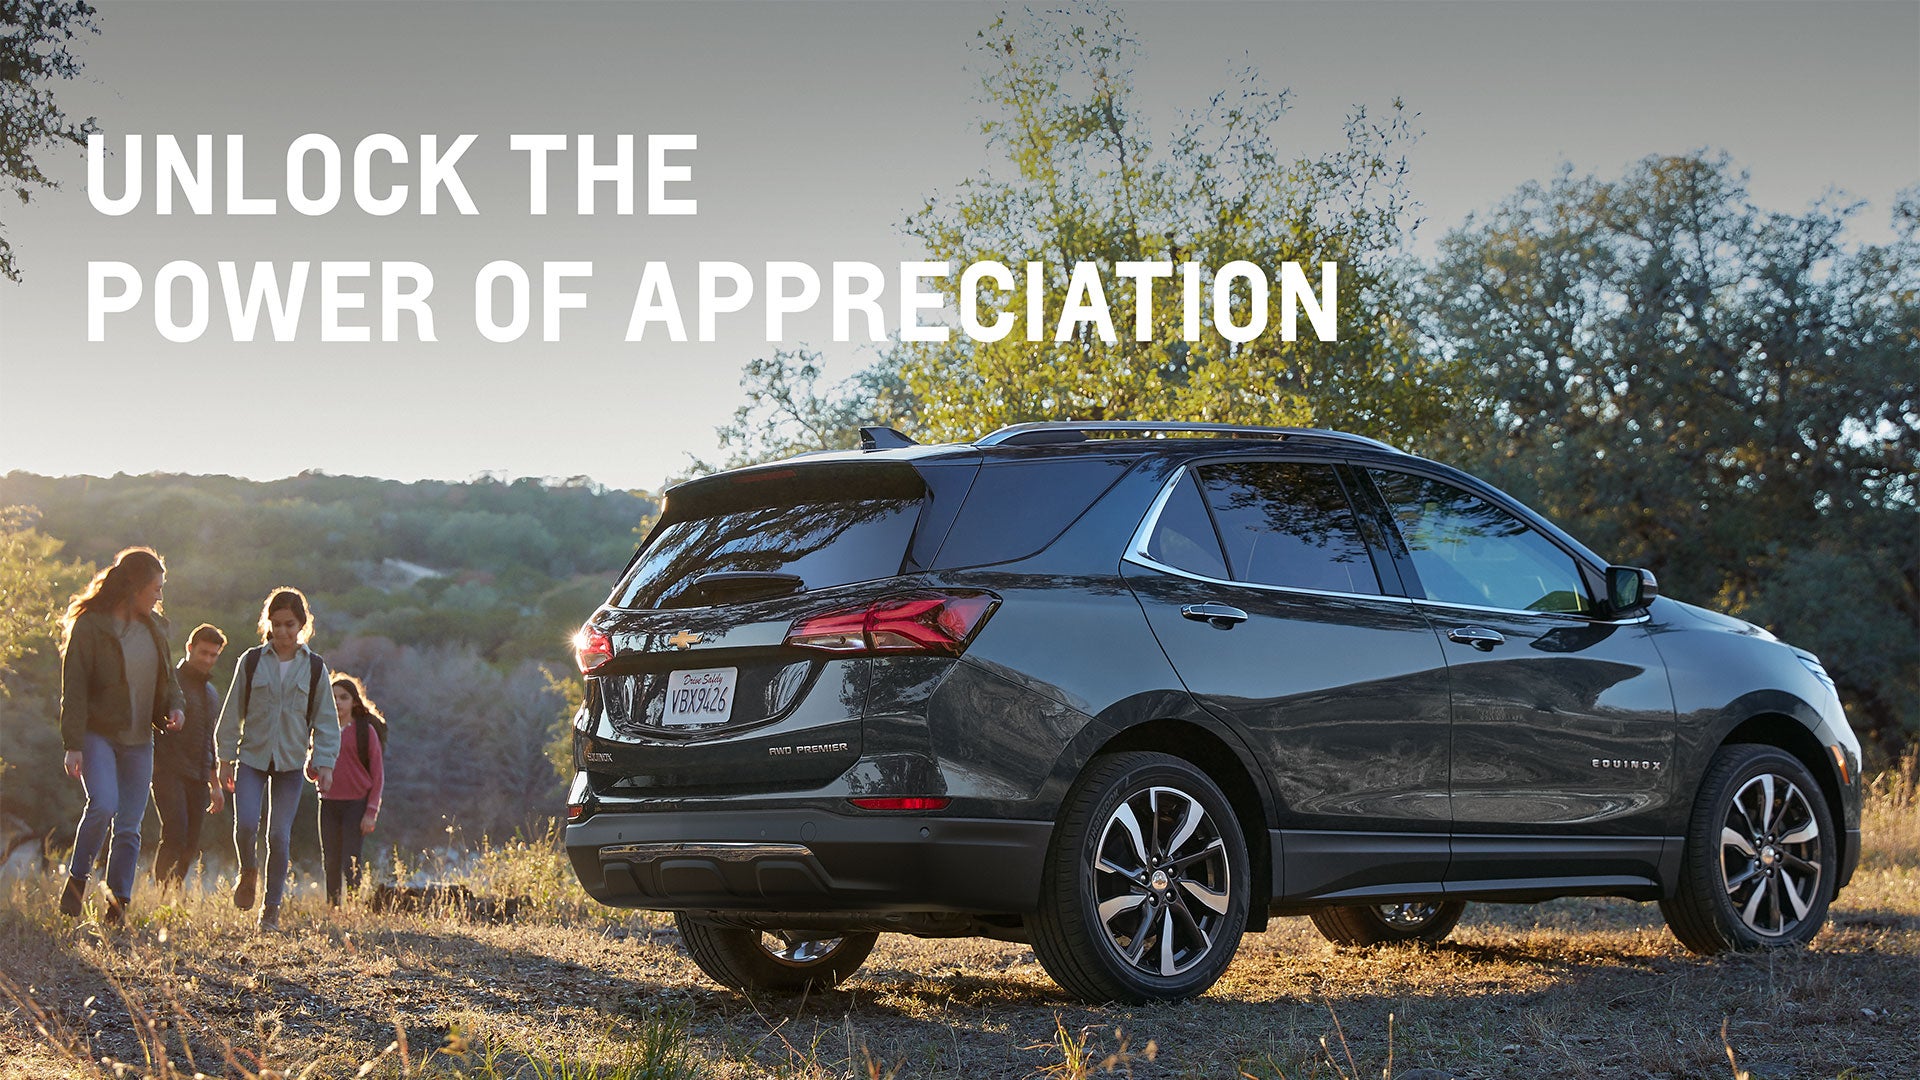 Unlock the power of appreciation | All American Chevrolet in MUNCIE IN